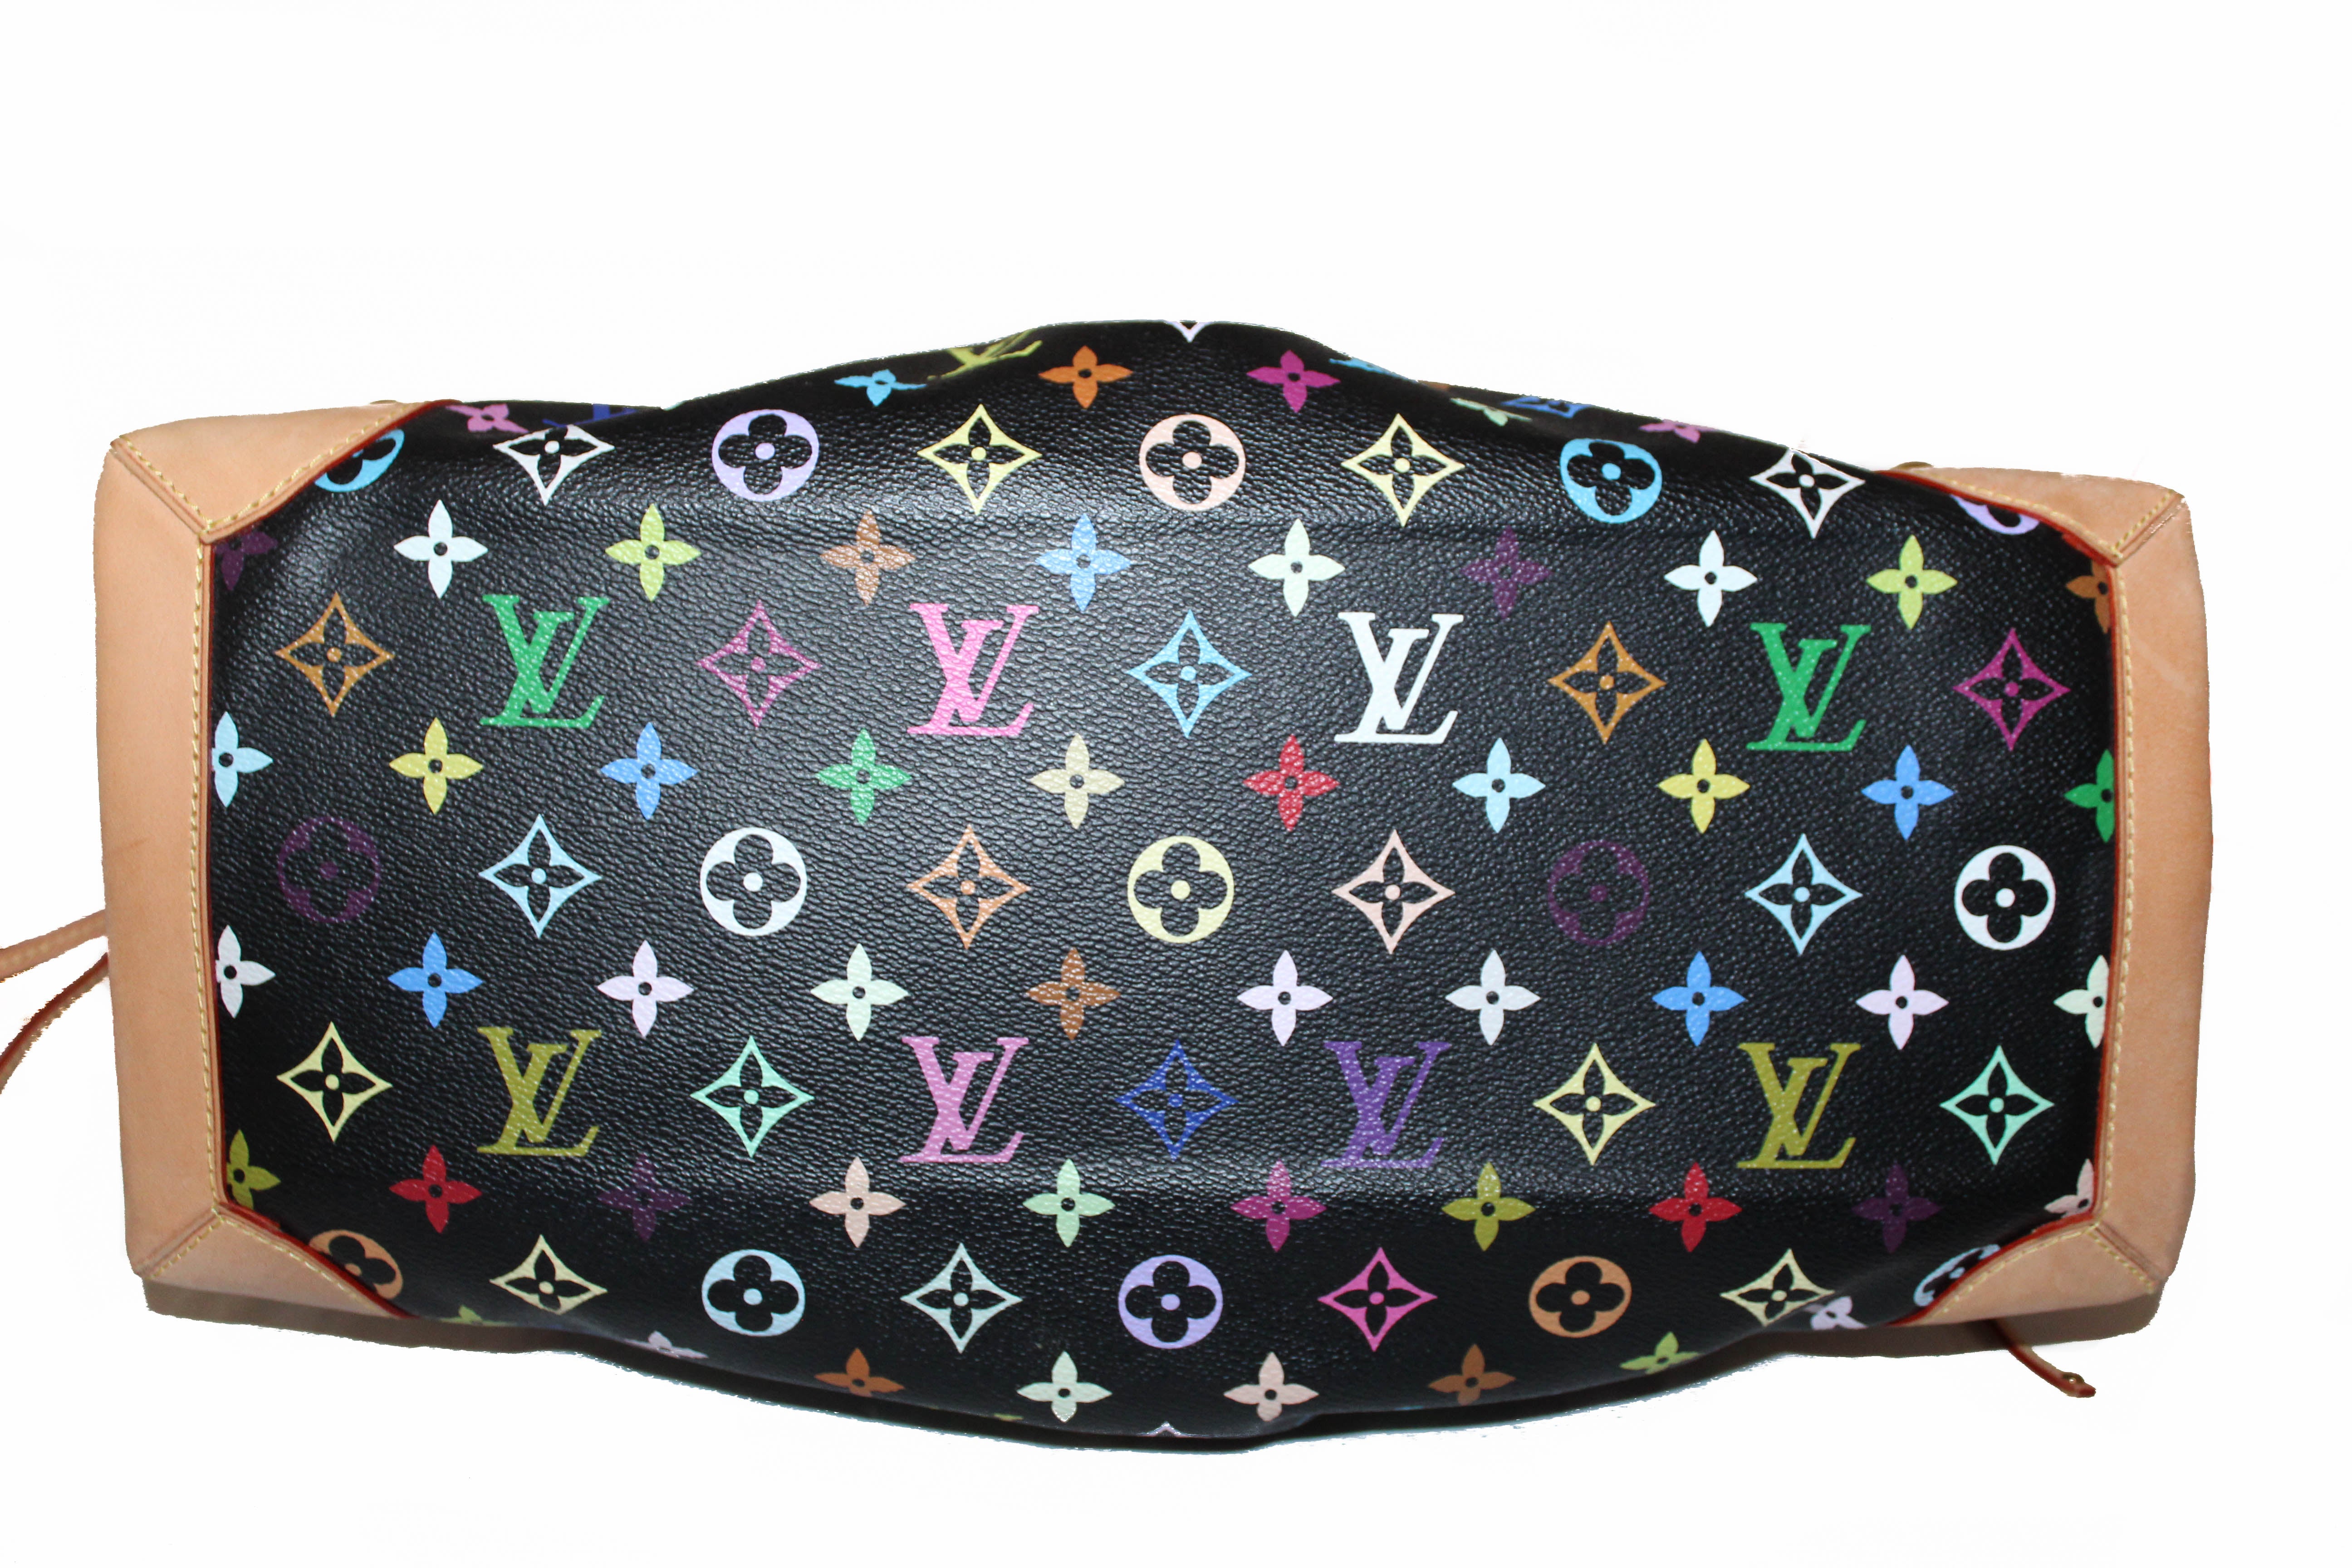 Louis Vuitton Black Multicolor Monogram Ursula Bag